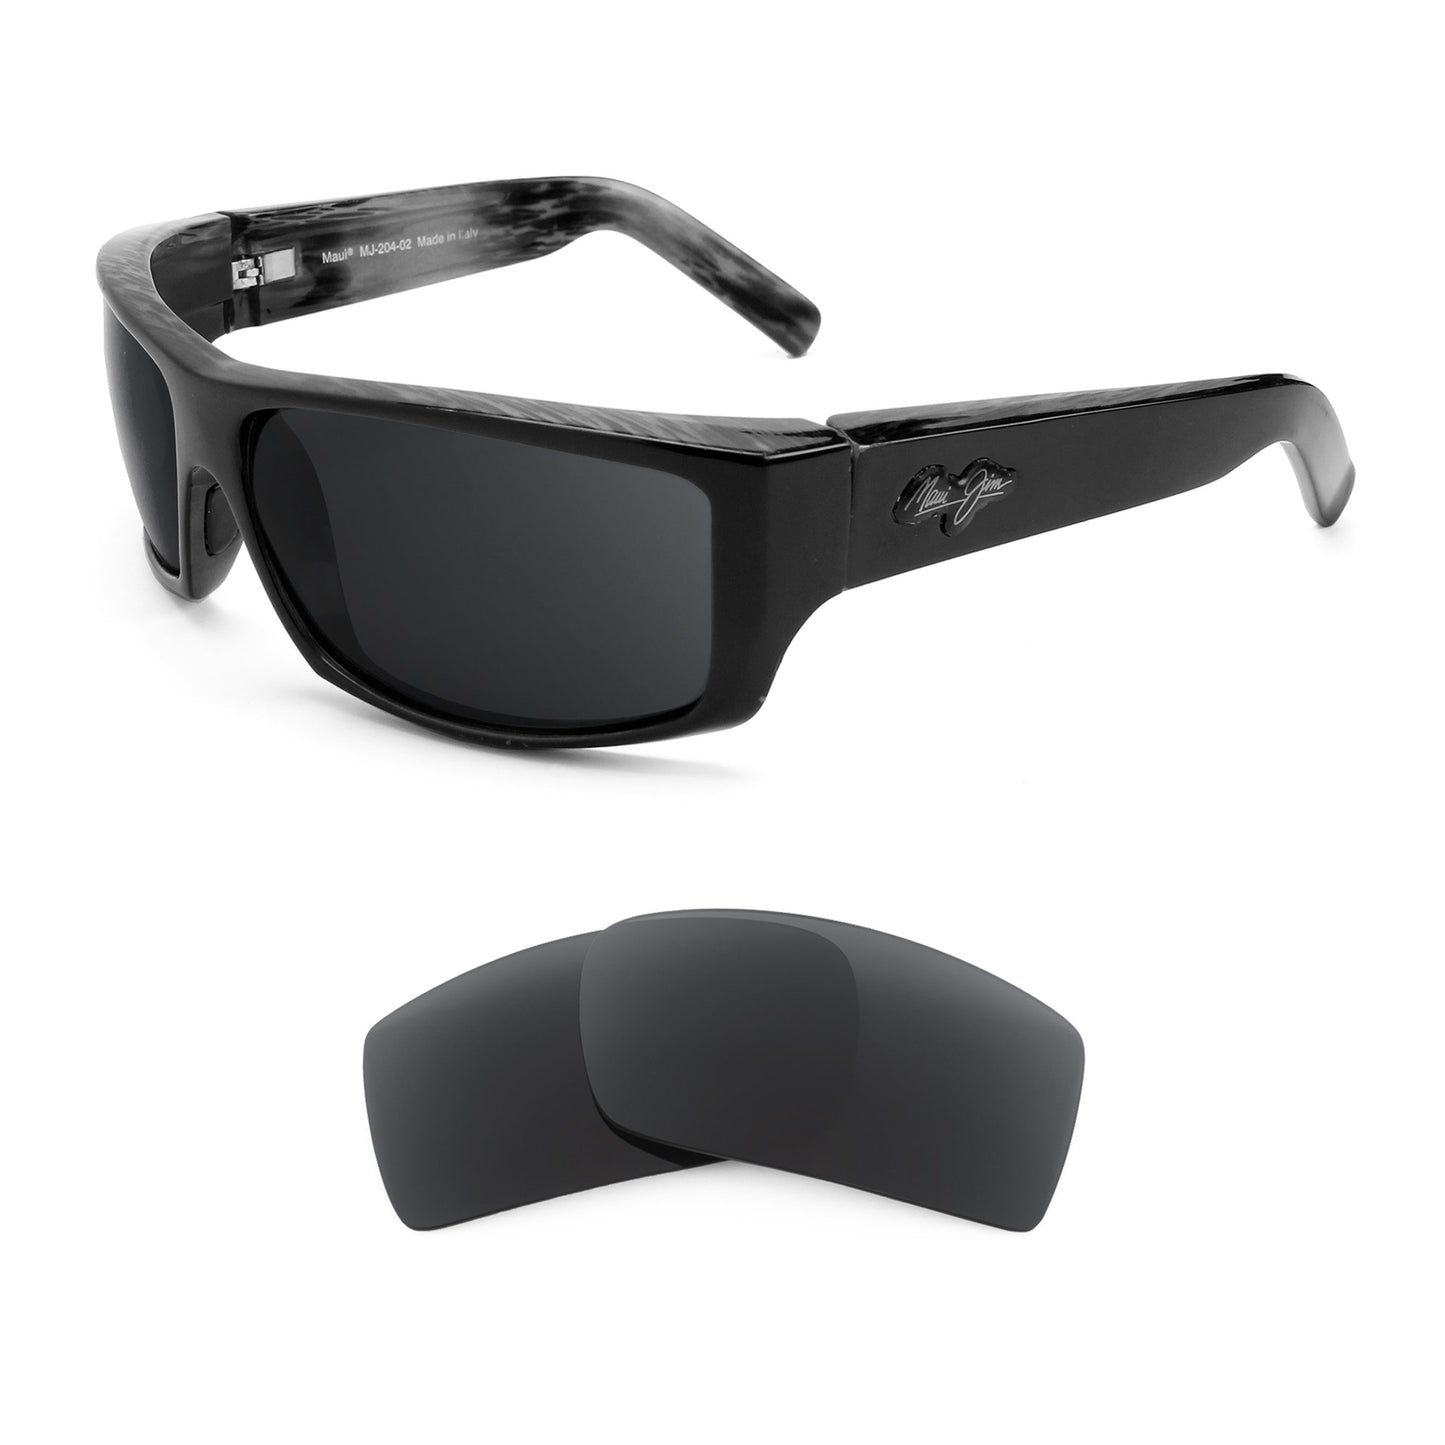 Maui Jim Kaimana MJ204 sunglasses with replacement lenses